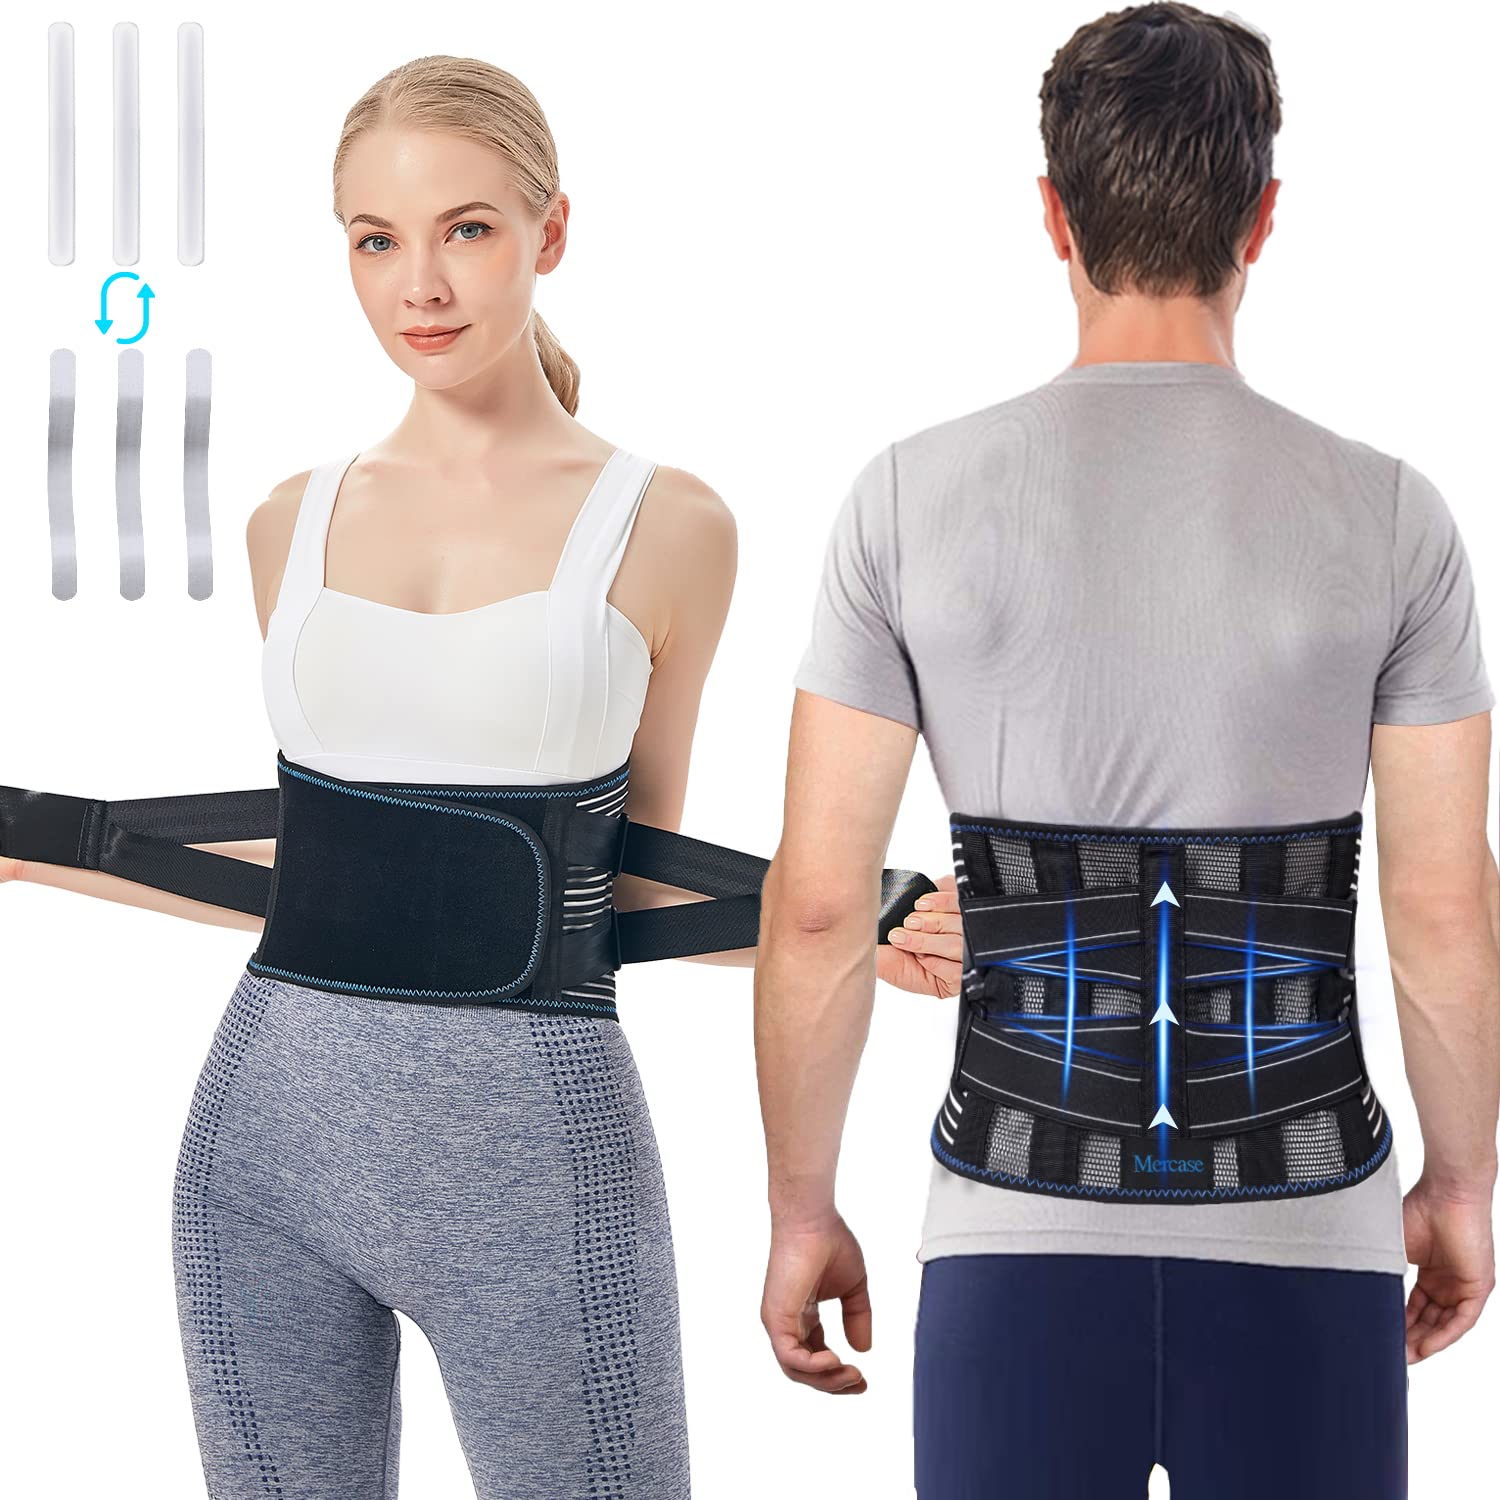 Mercase Back Brace for Lower Back Pain Relief, Back Support Belt